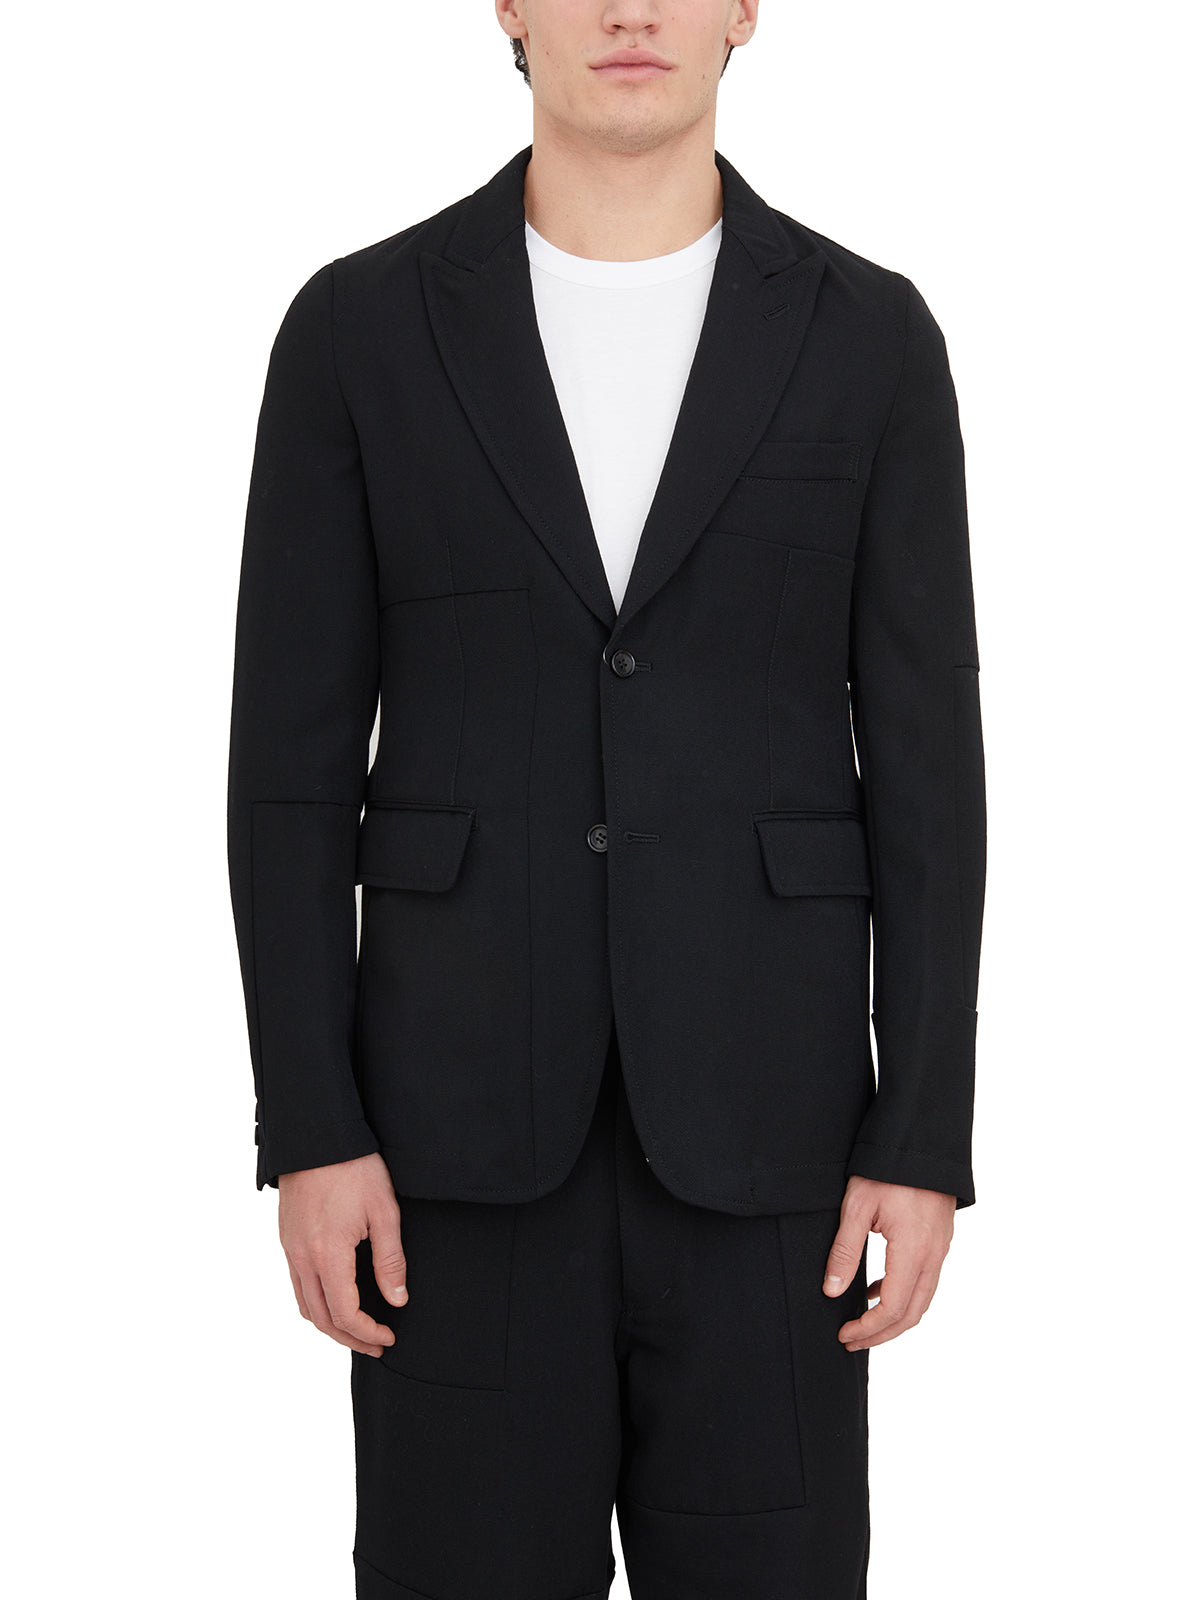 COMME DES GARÇONS SHIRT Sophisticated Black Wool Blazer for Men